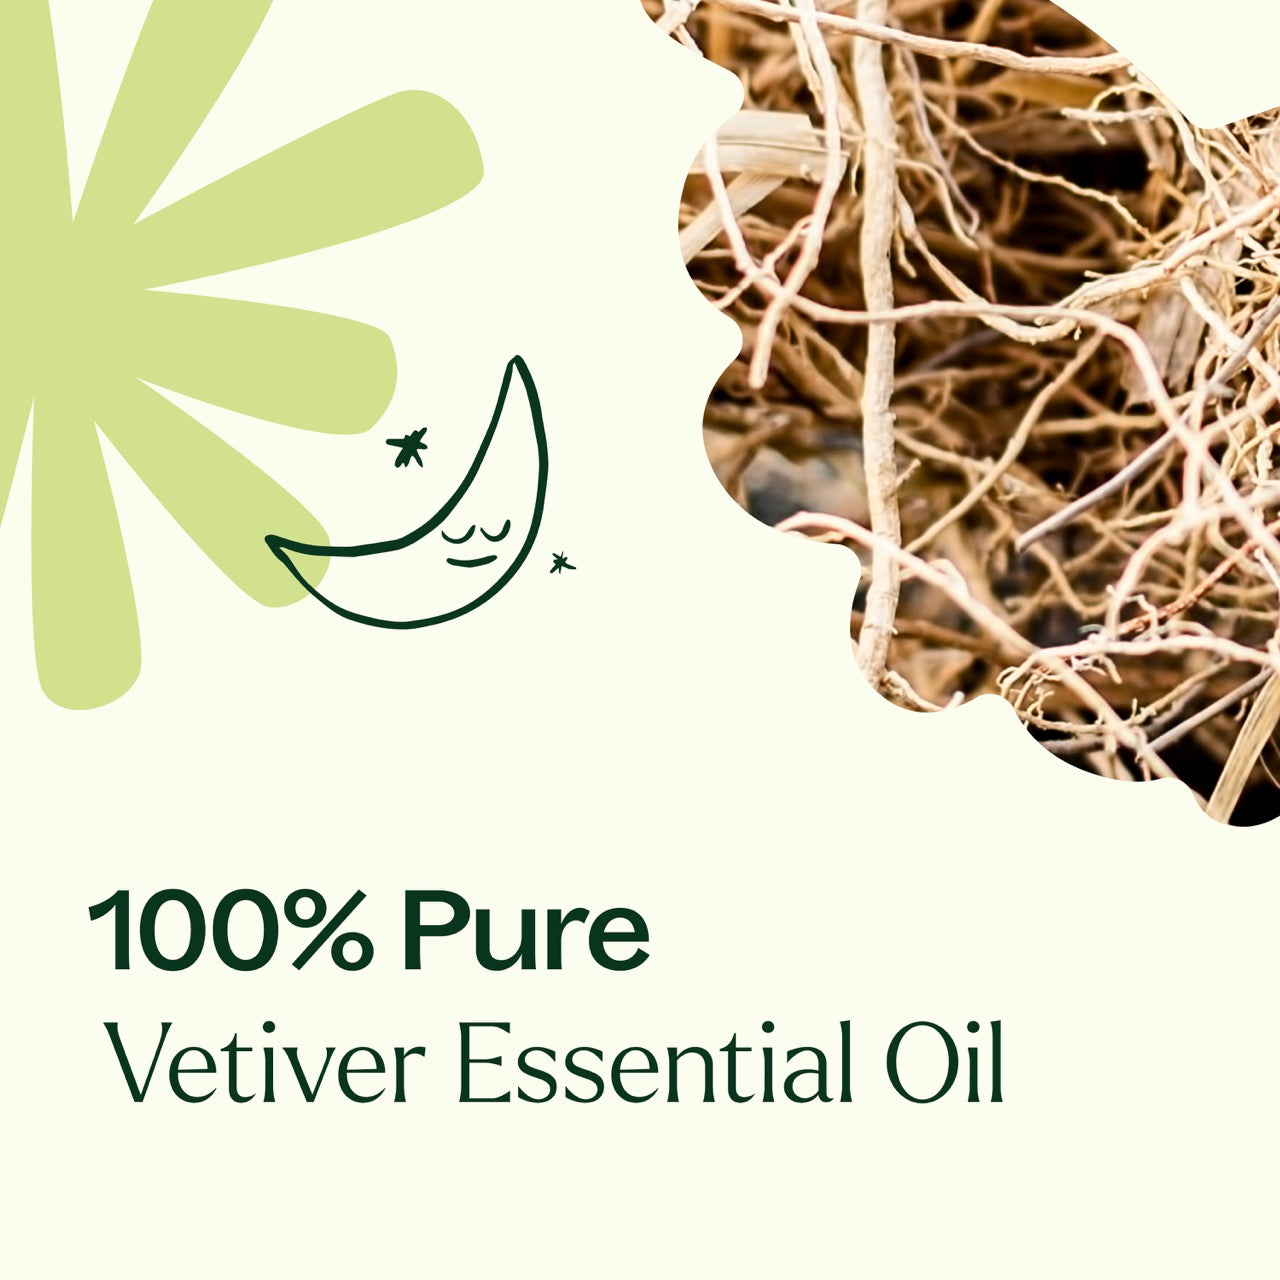 100% pure vetiver essential oil